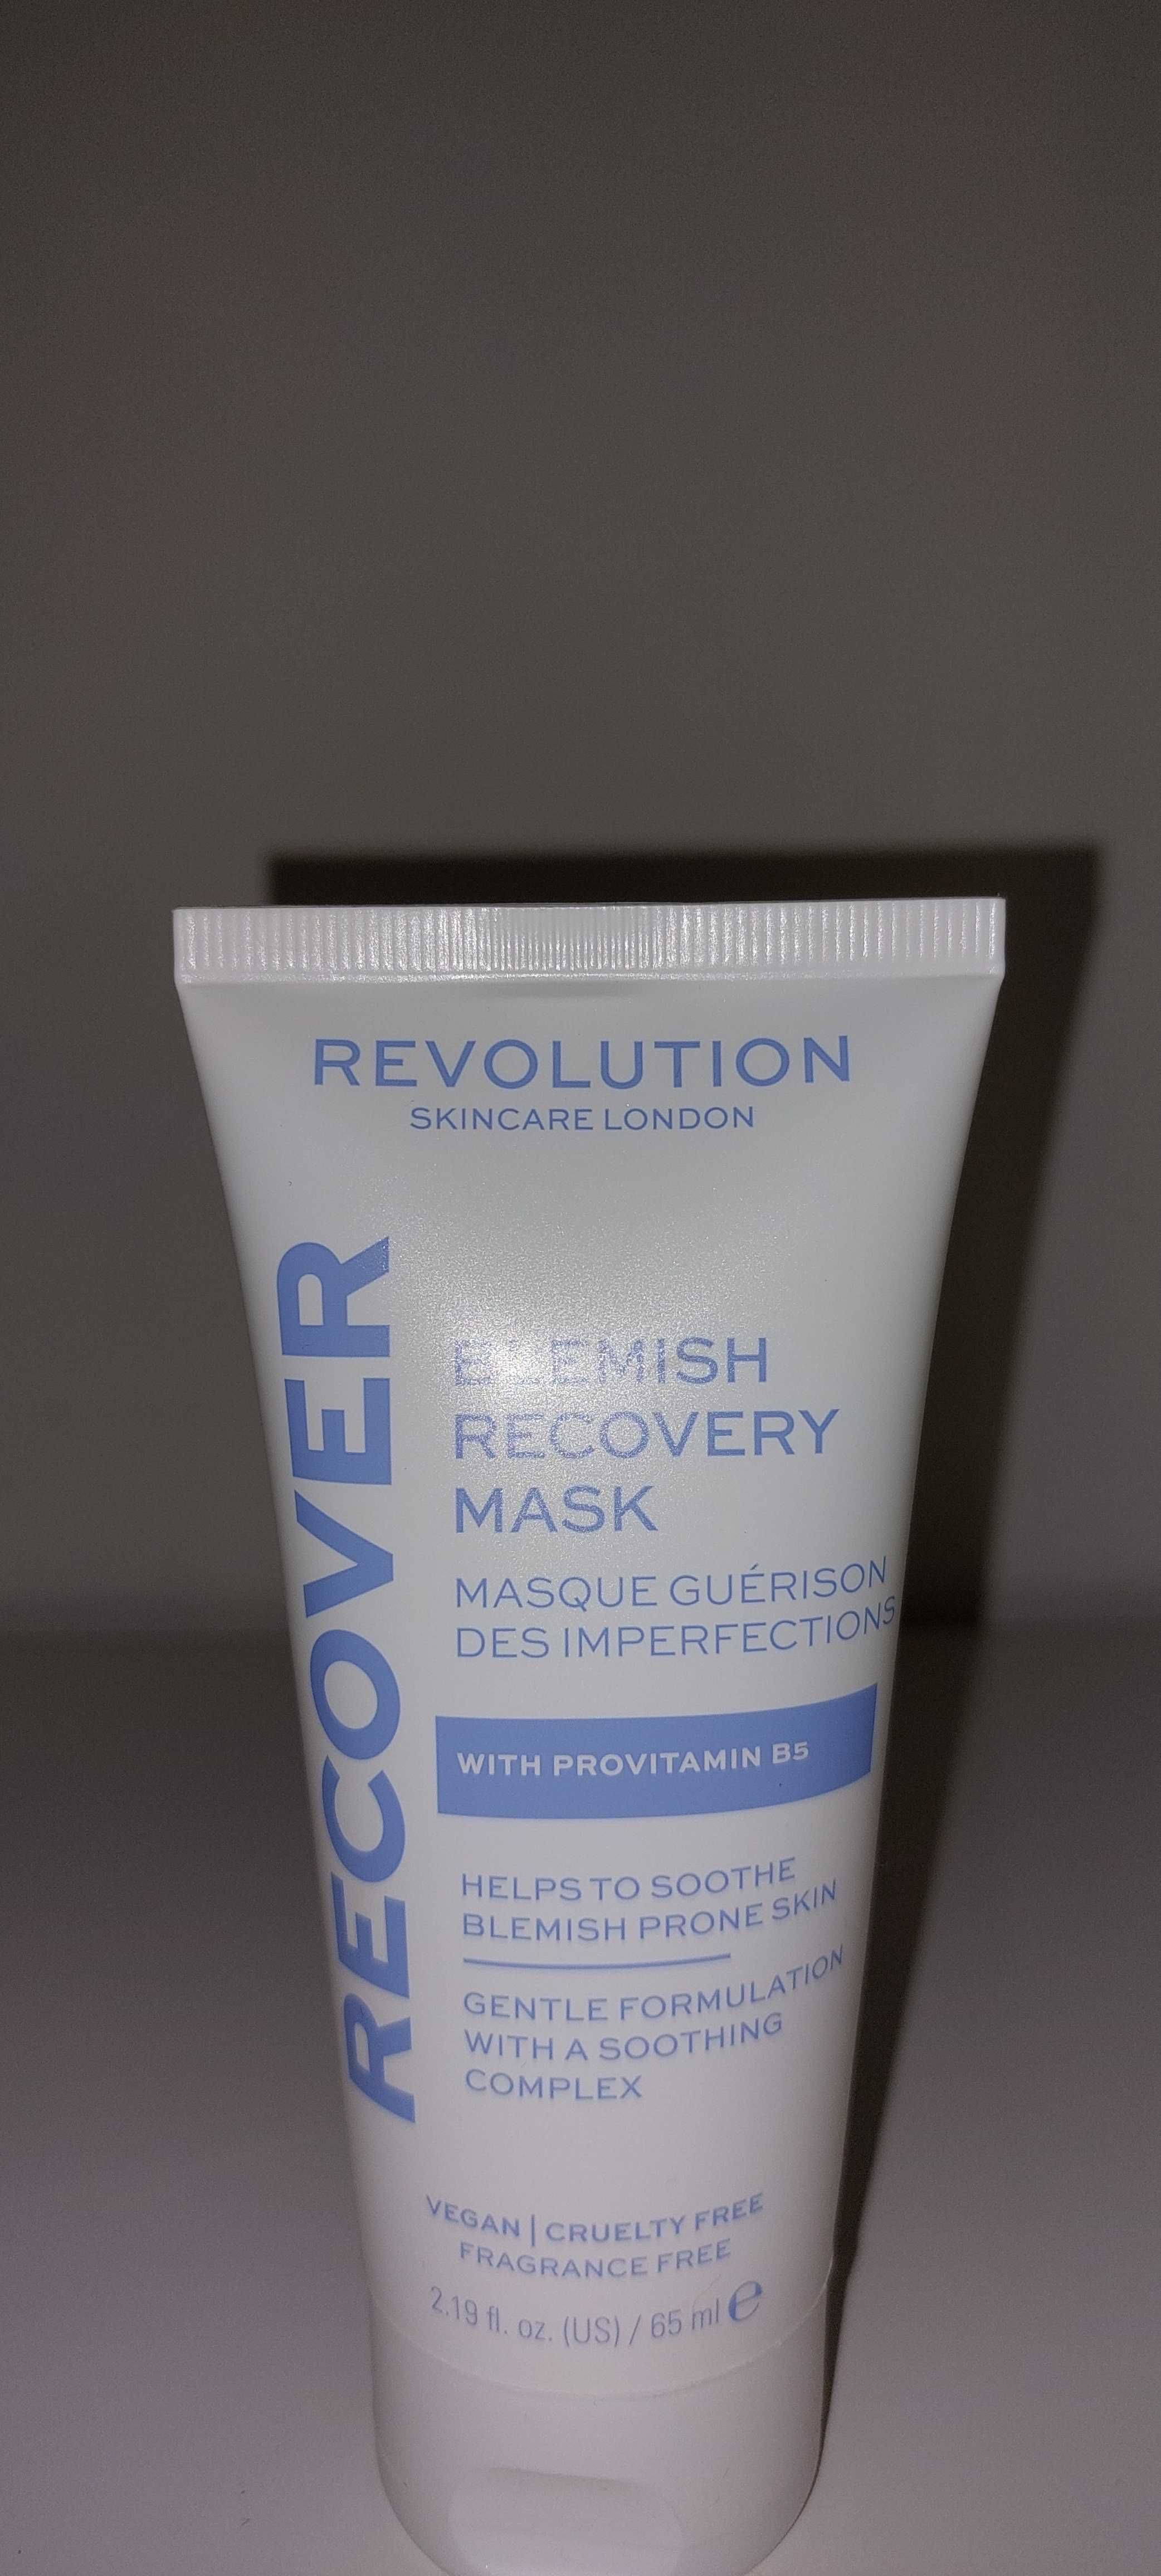 Revolution Skincare Blemish Recovery Mask